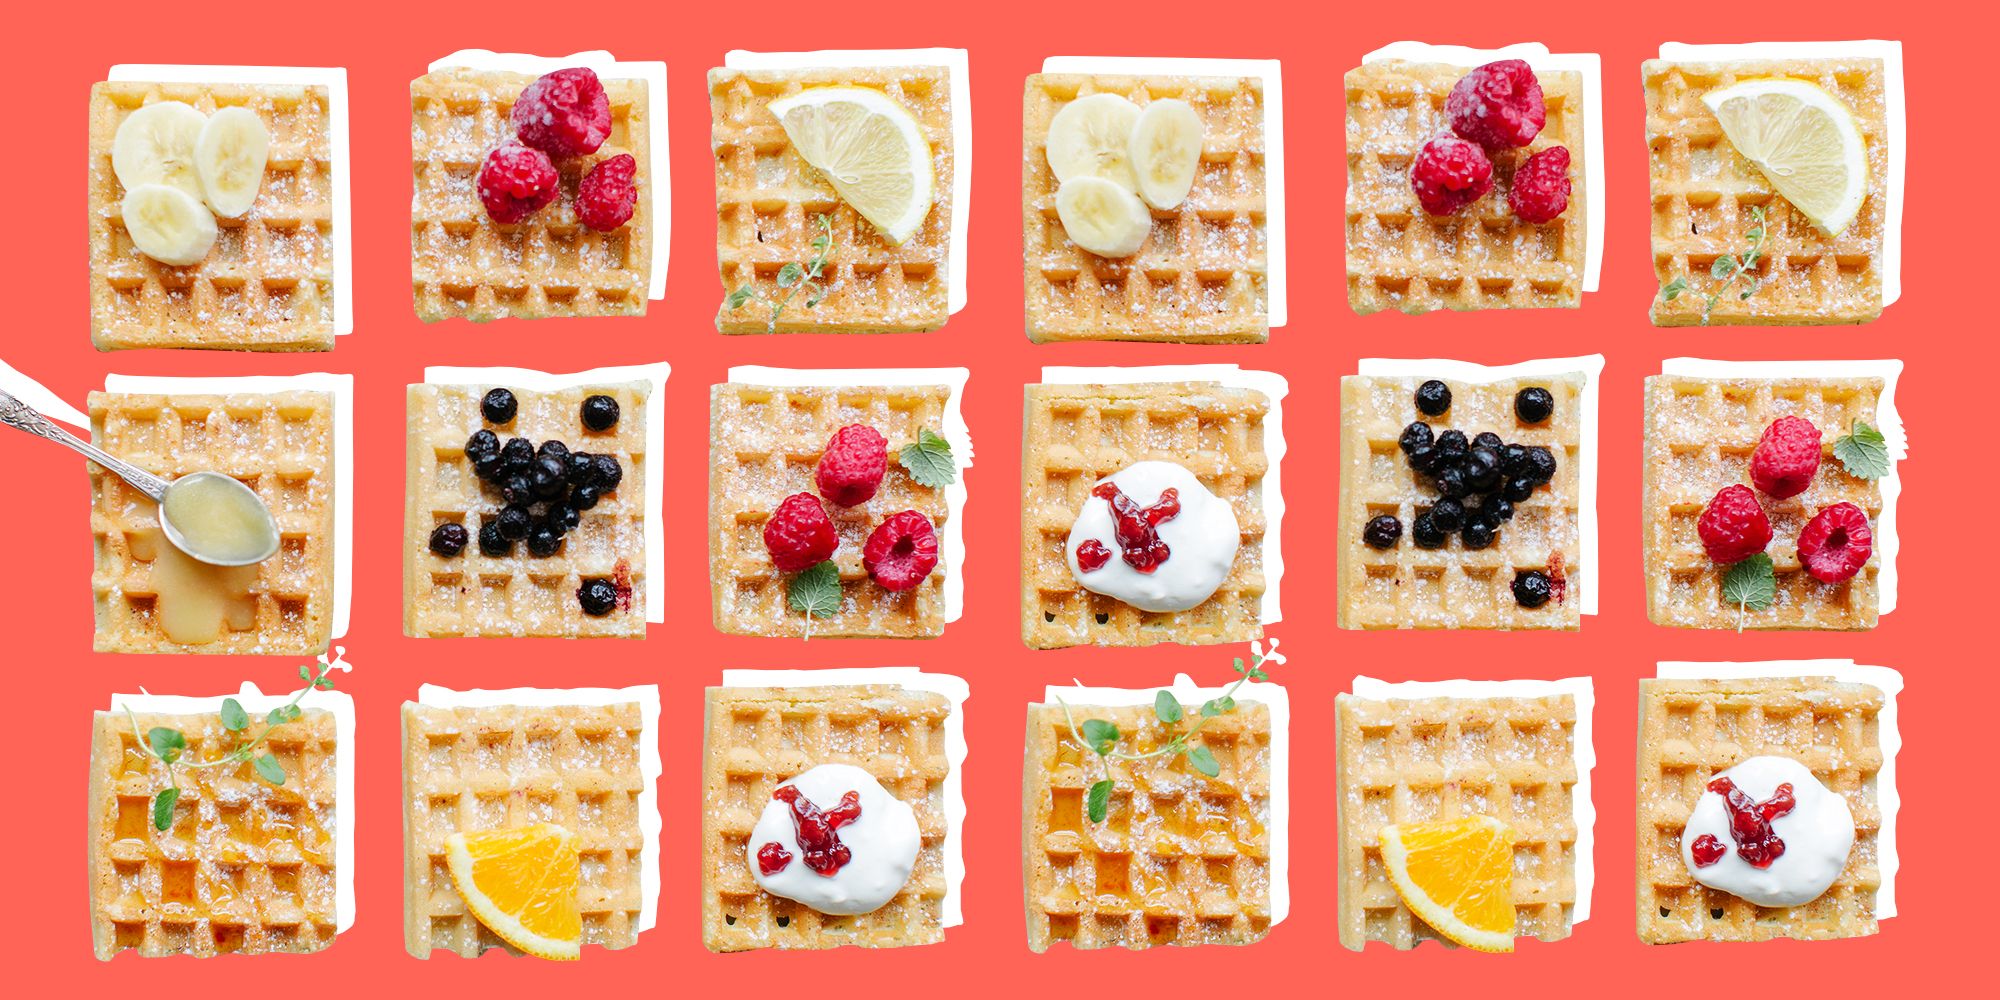 CucinaPro Building Brick Electric Waffle Maker produces 14 fun brick-shaped  waffles » Gadget Flow